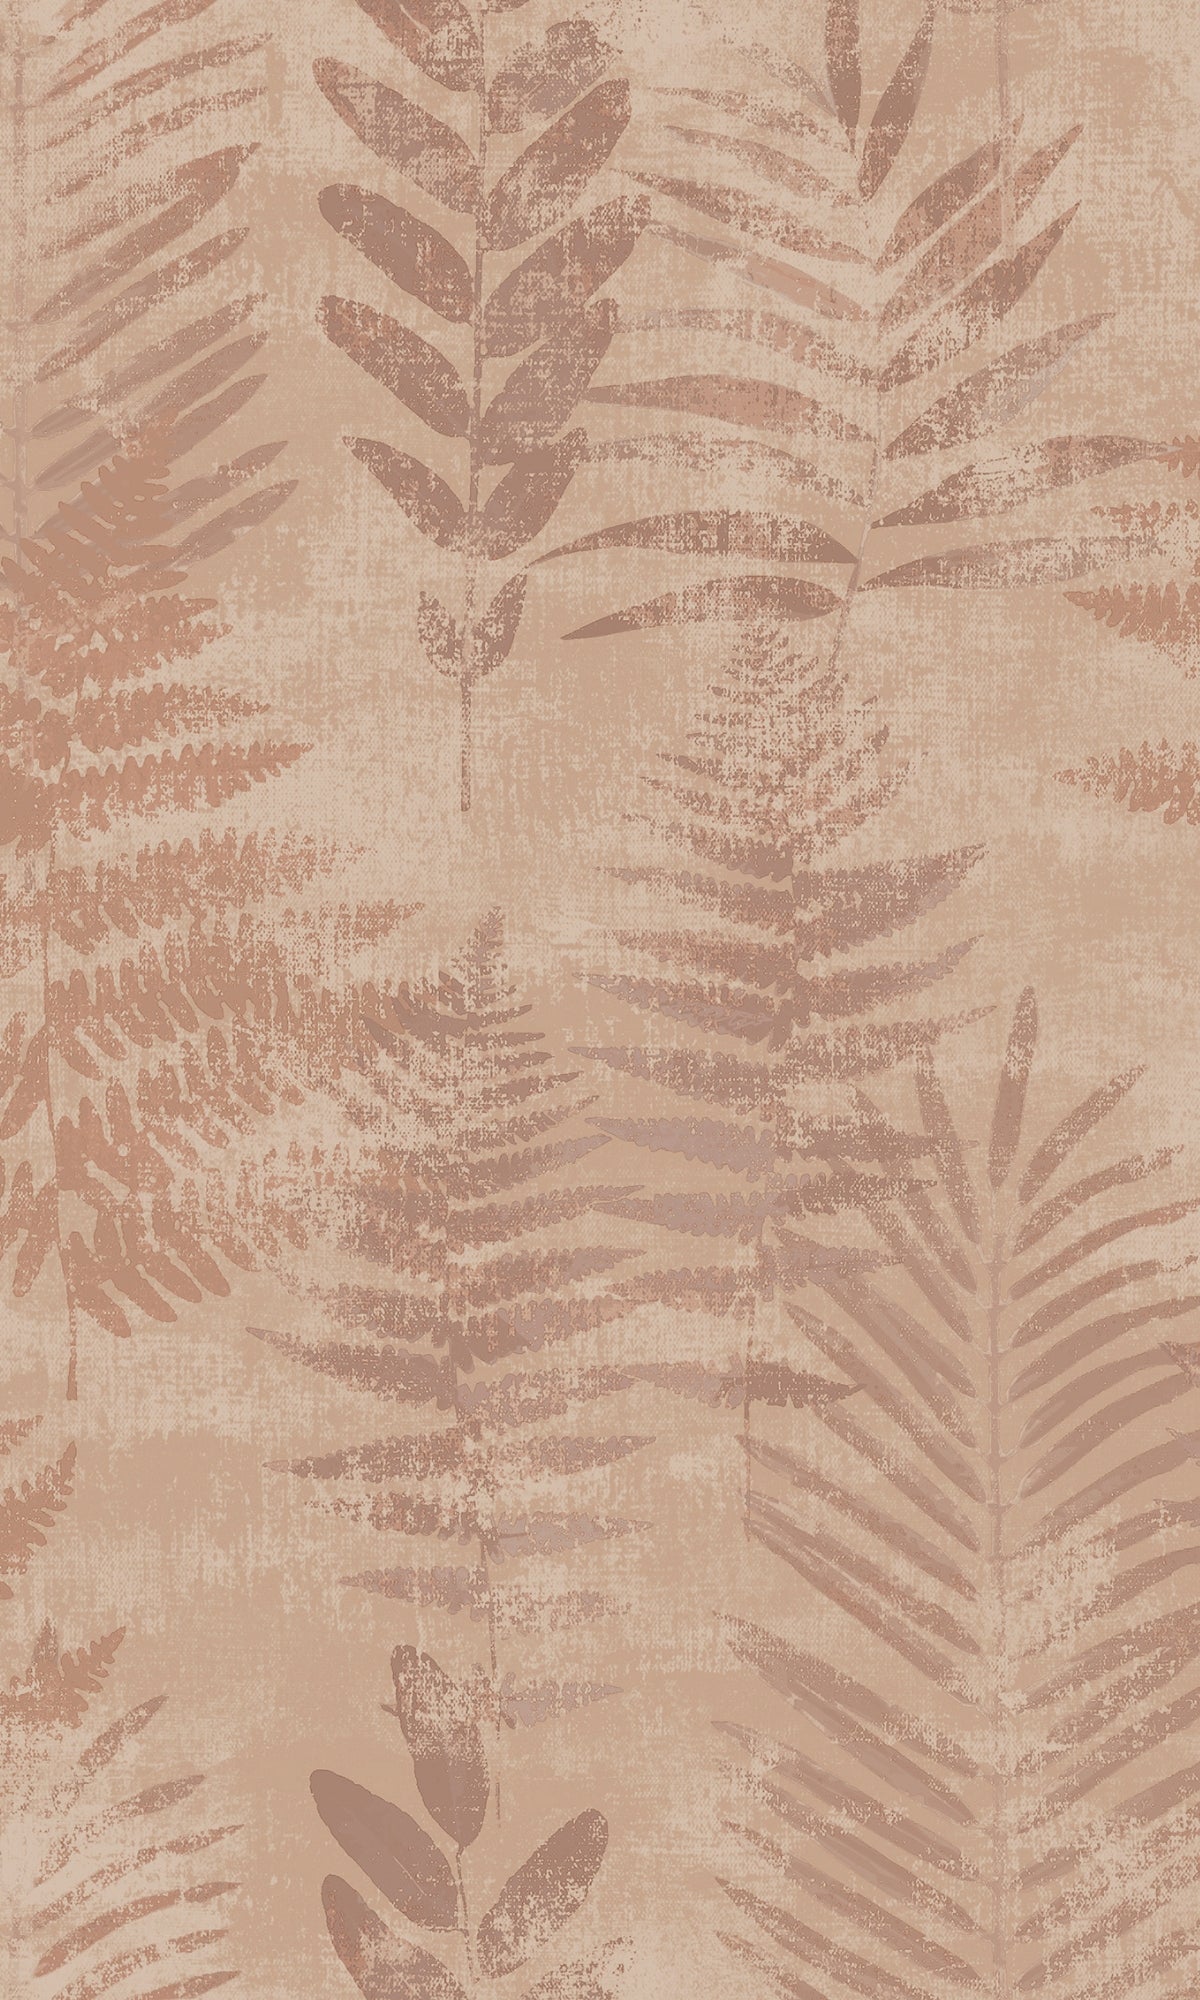 Terracota Fern Leaves Tropical Wallpaper R8181